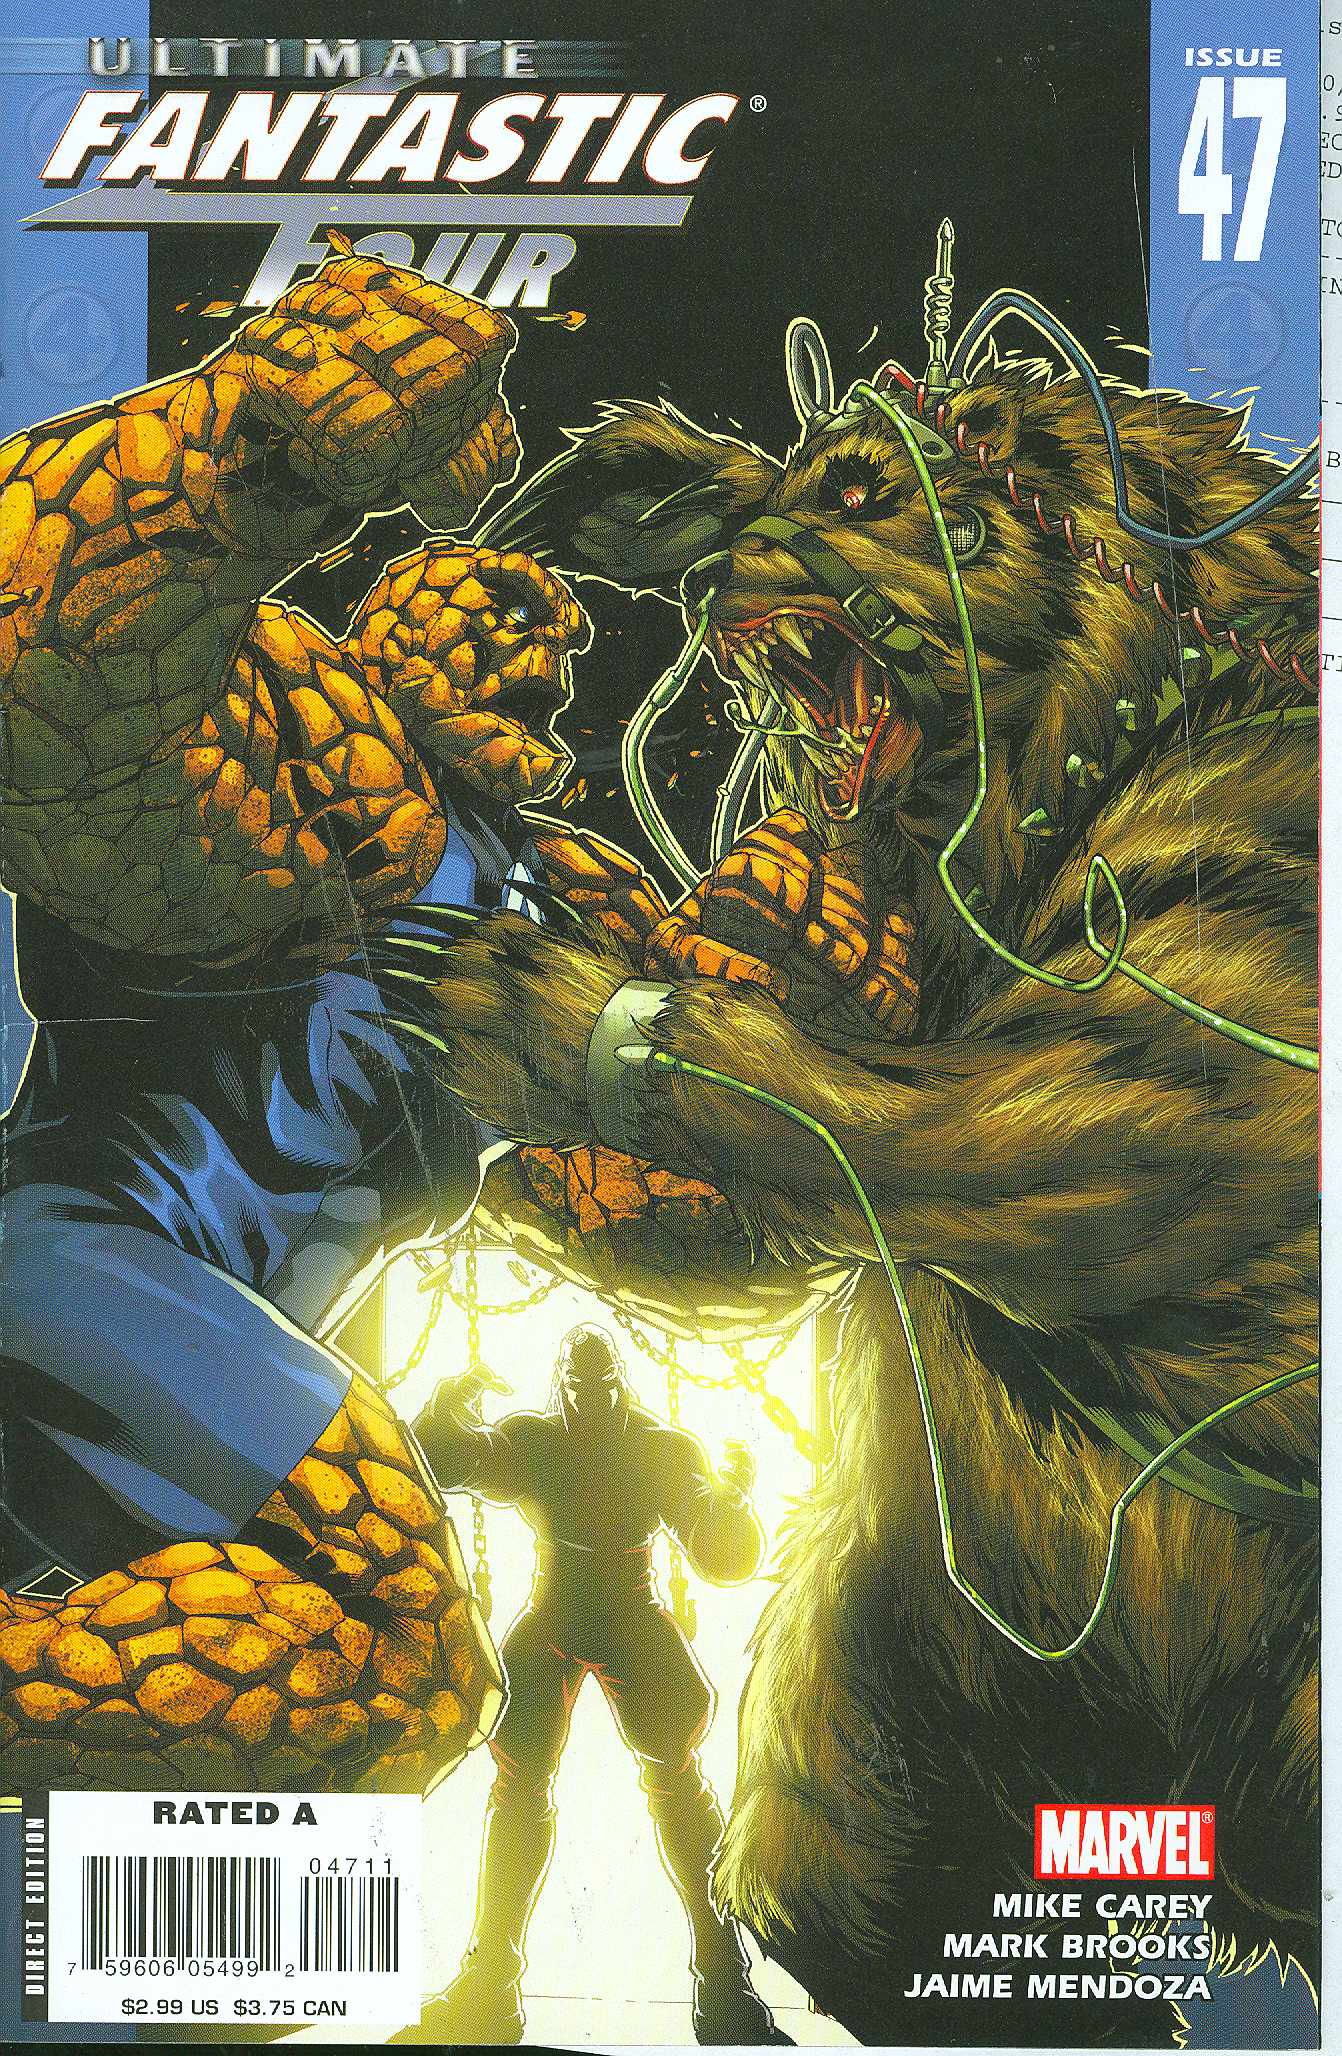 Ultimate Fantastic Four #47 (2003)